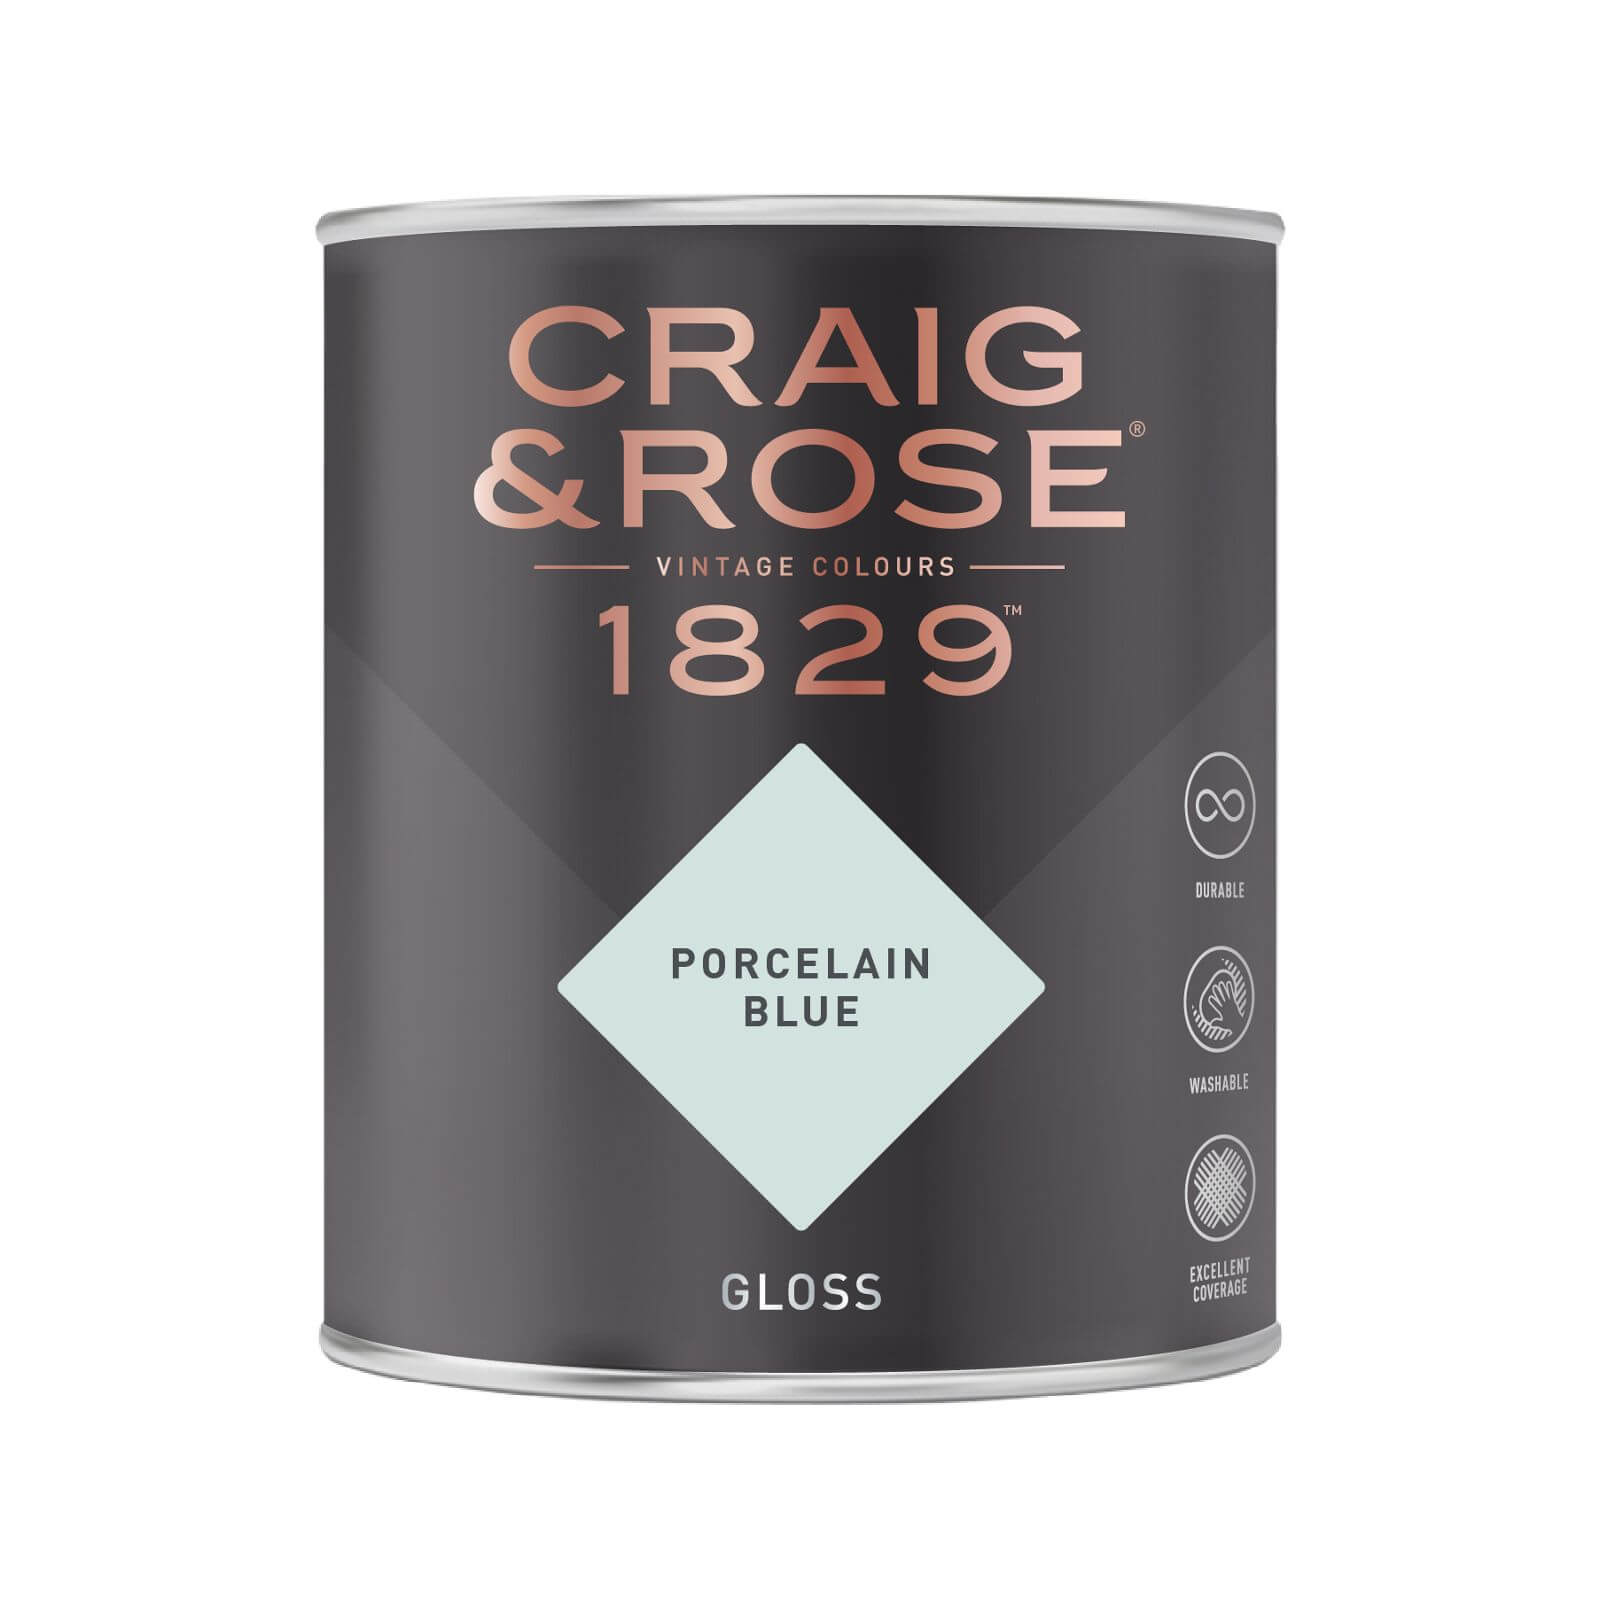 Craig & Rose 1829 Gloss Paint Porcelain Blue - 750ml